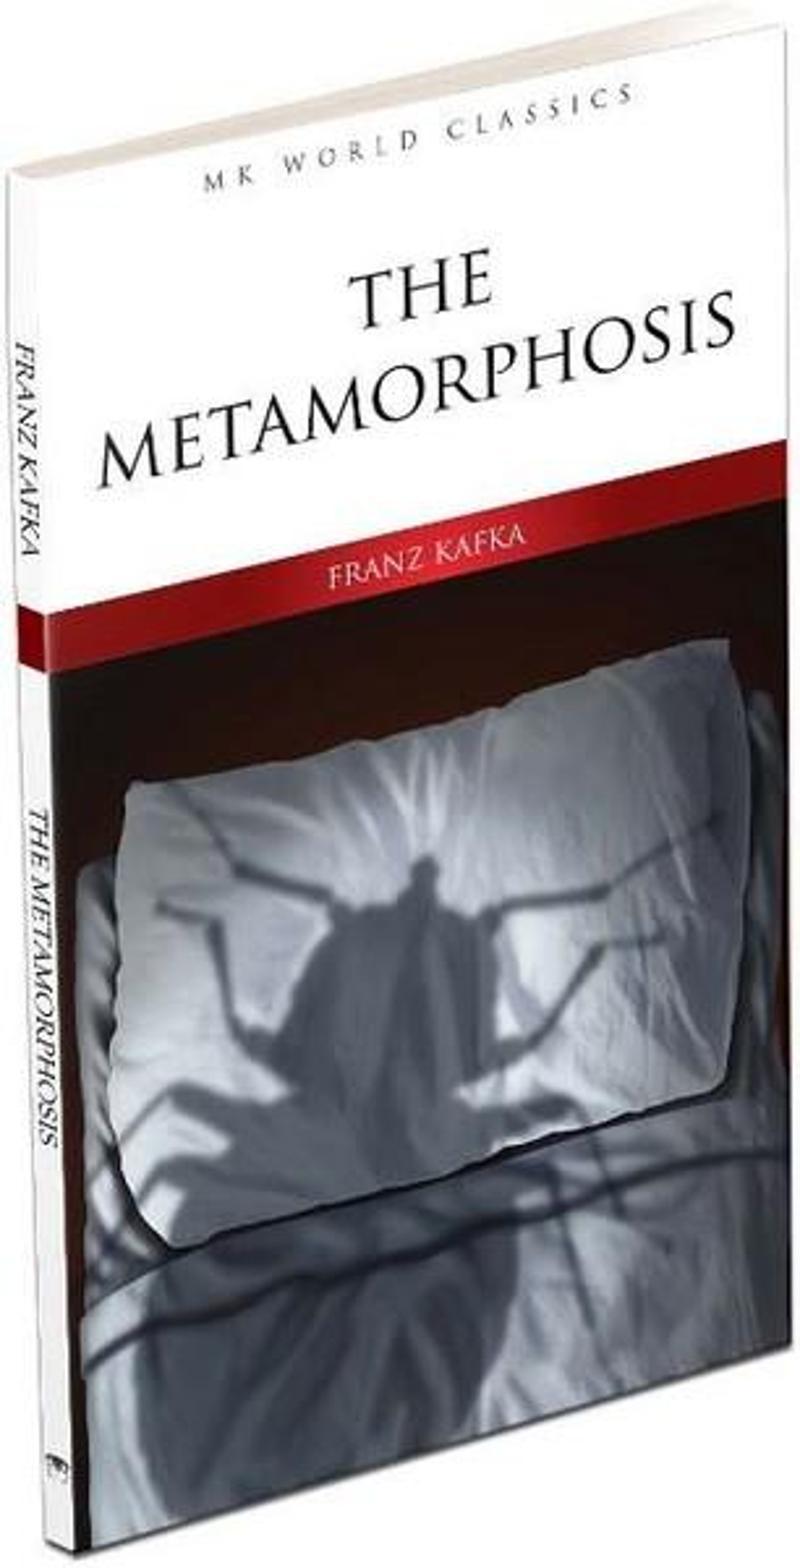 MK Publications The Metamorphosis İngilizce Klasik Roman - Franz Kafka